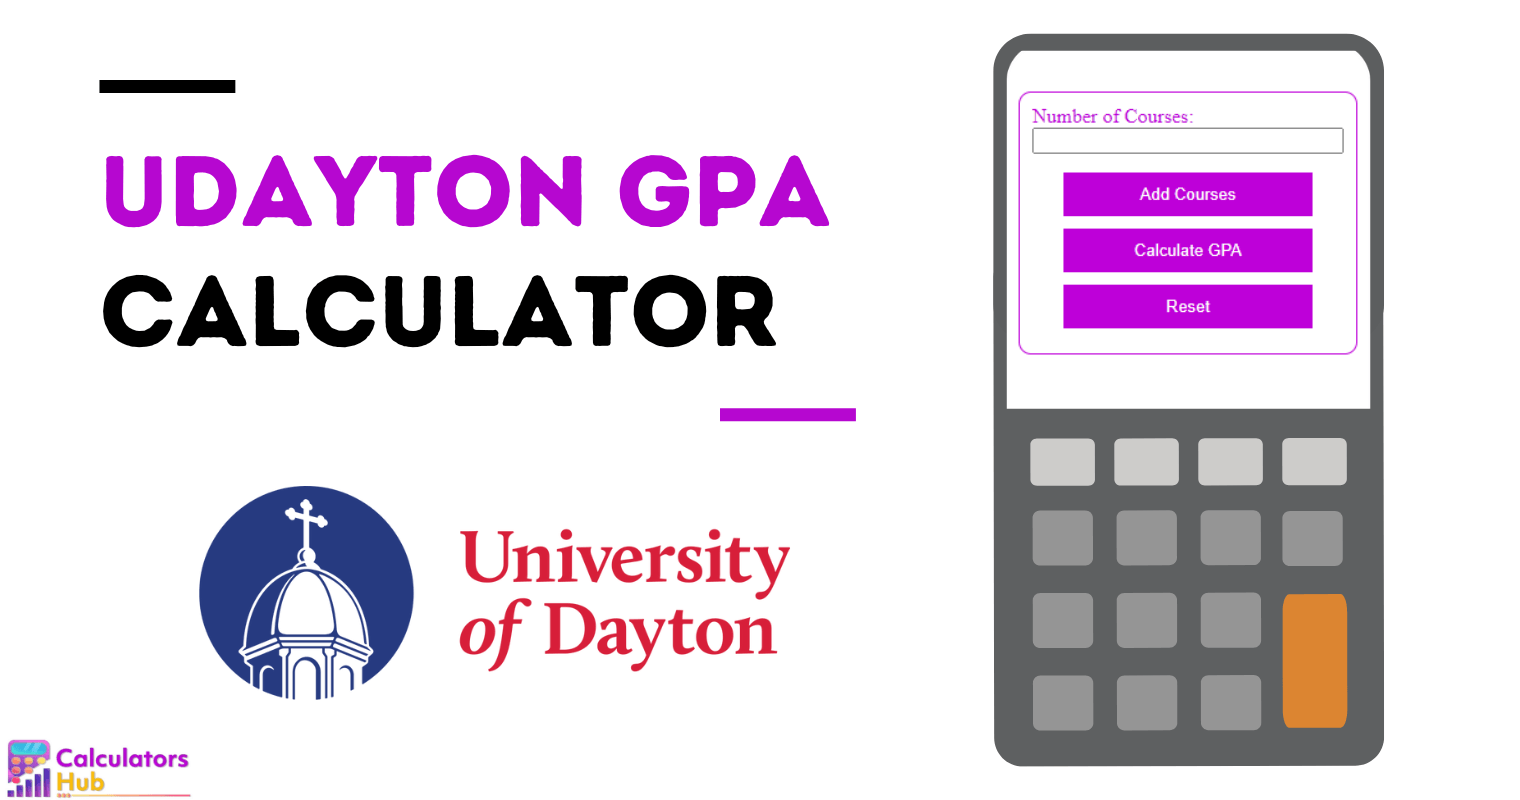 UDayton GPA Calculator